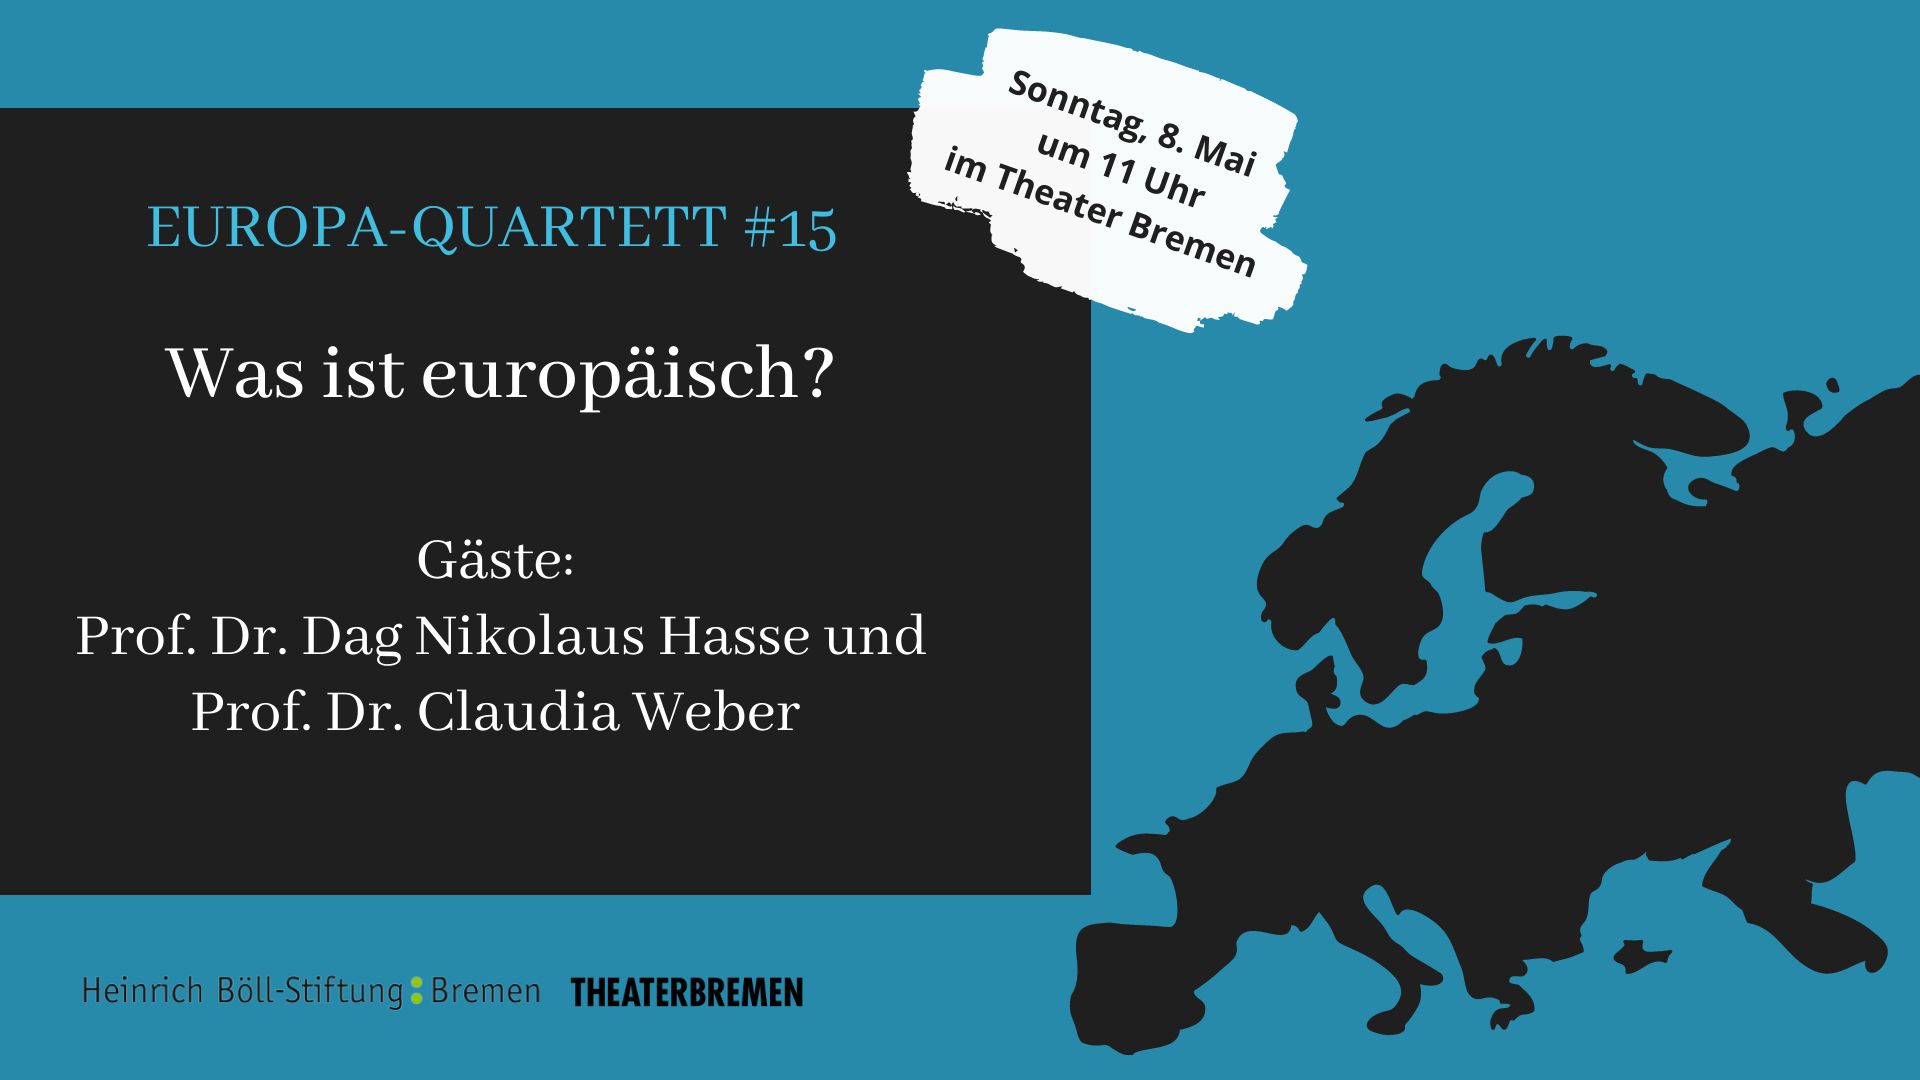 Europa-Quartett #15: Was ist europäisch?